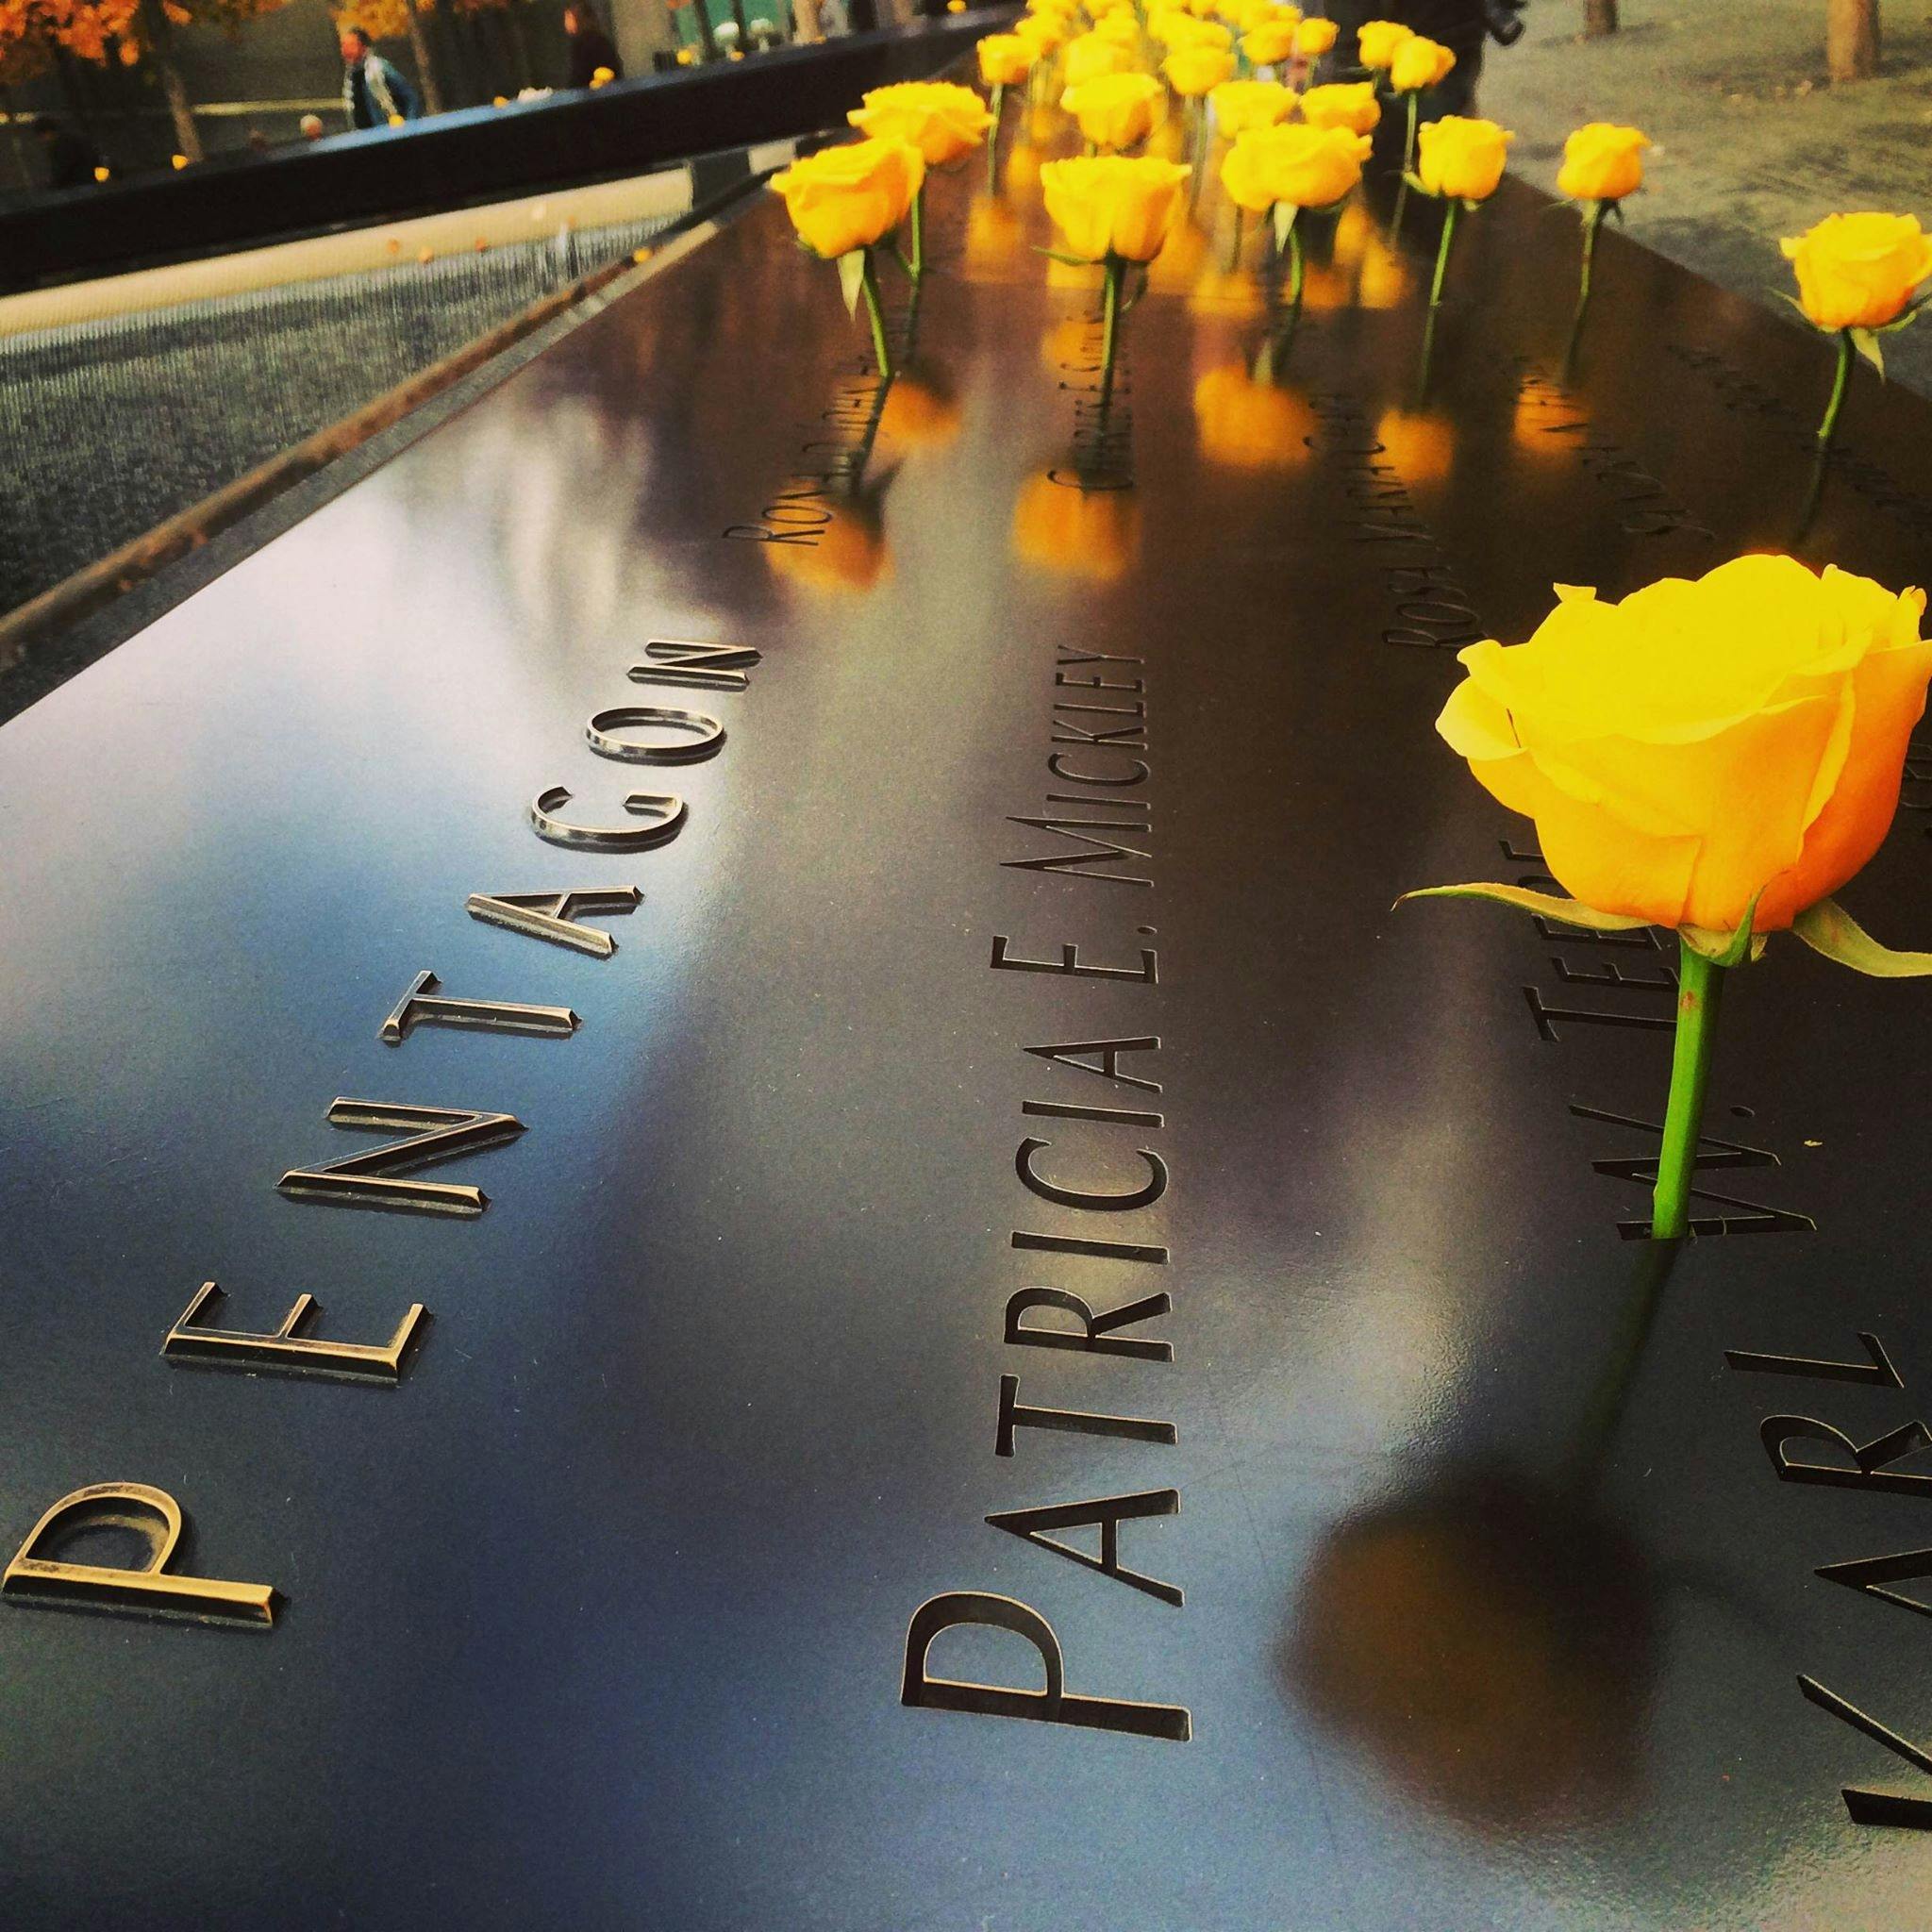 Ground Zero Walking Tour with 9-11 Memorial Musement